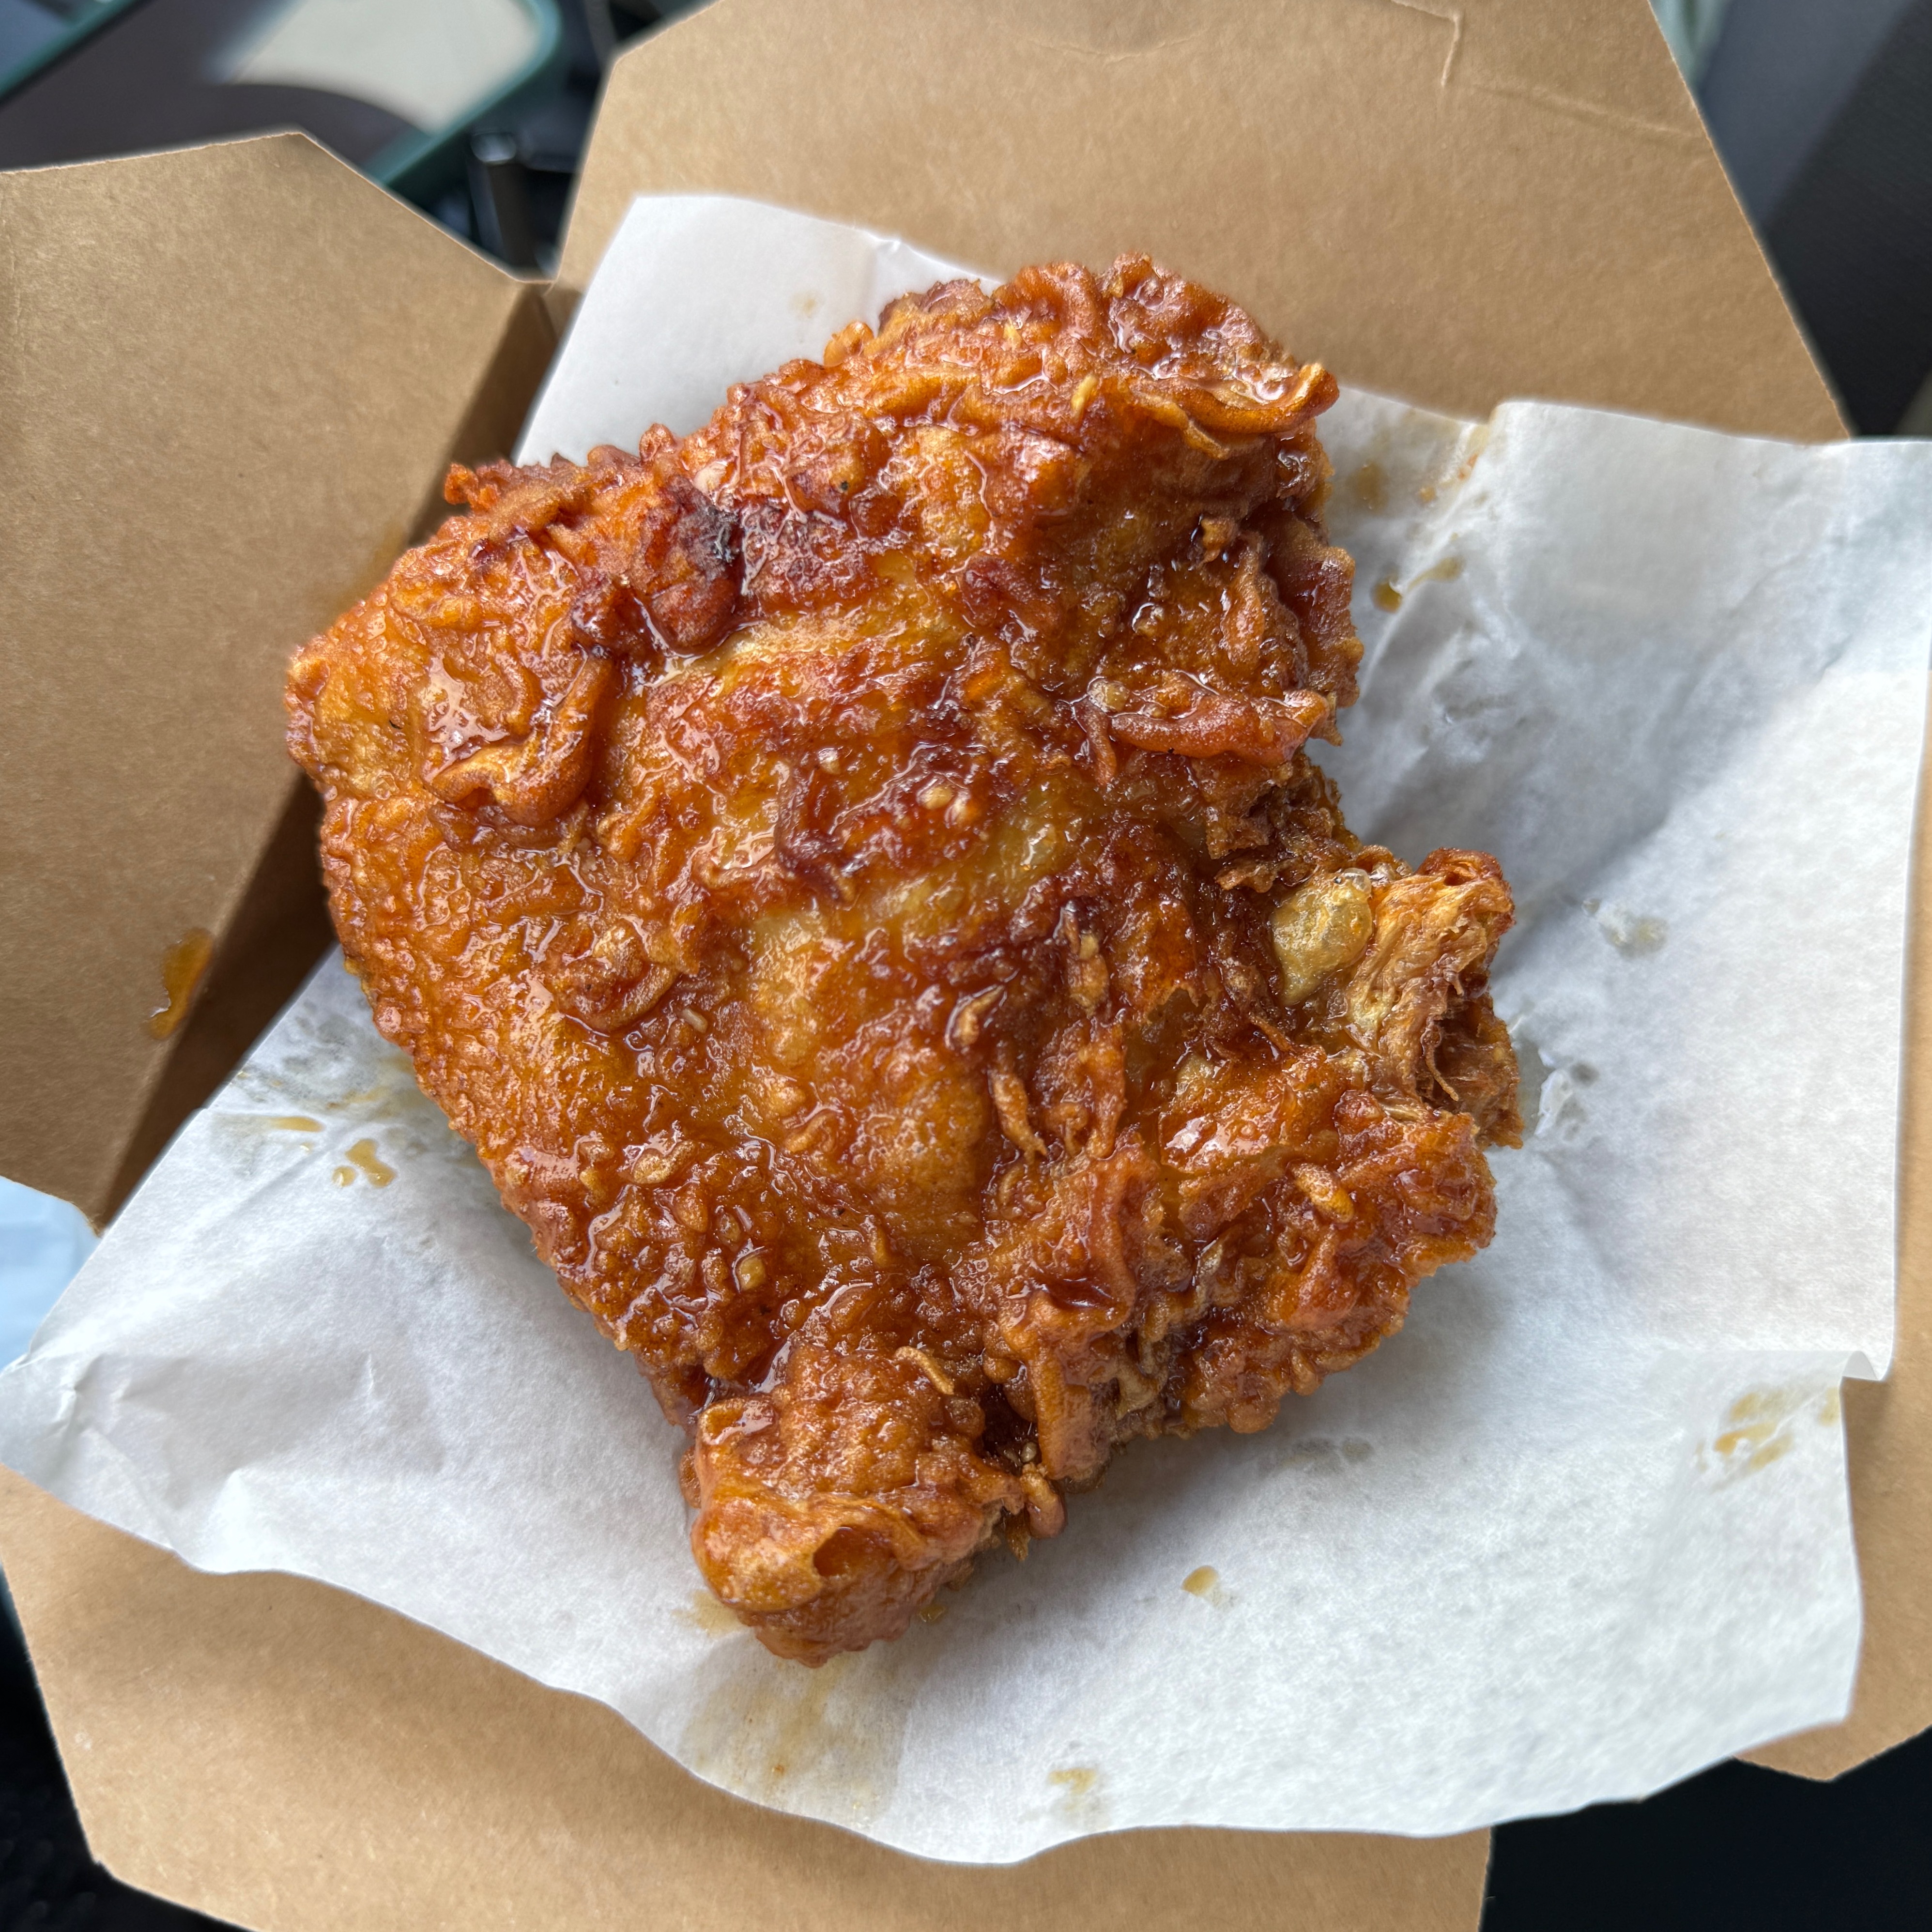 Fried Chicken Thigh (Honey Soy Garlic) $5 from Honey Dress Fried Chicken on #foodmento http://foodmento.com/dish/57396